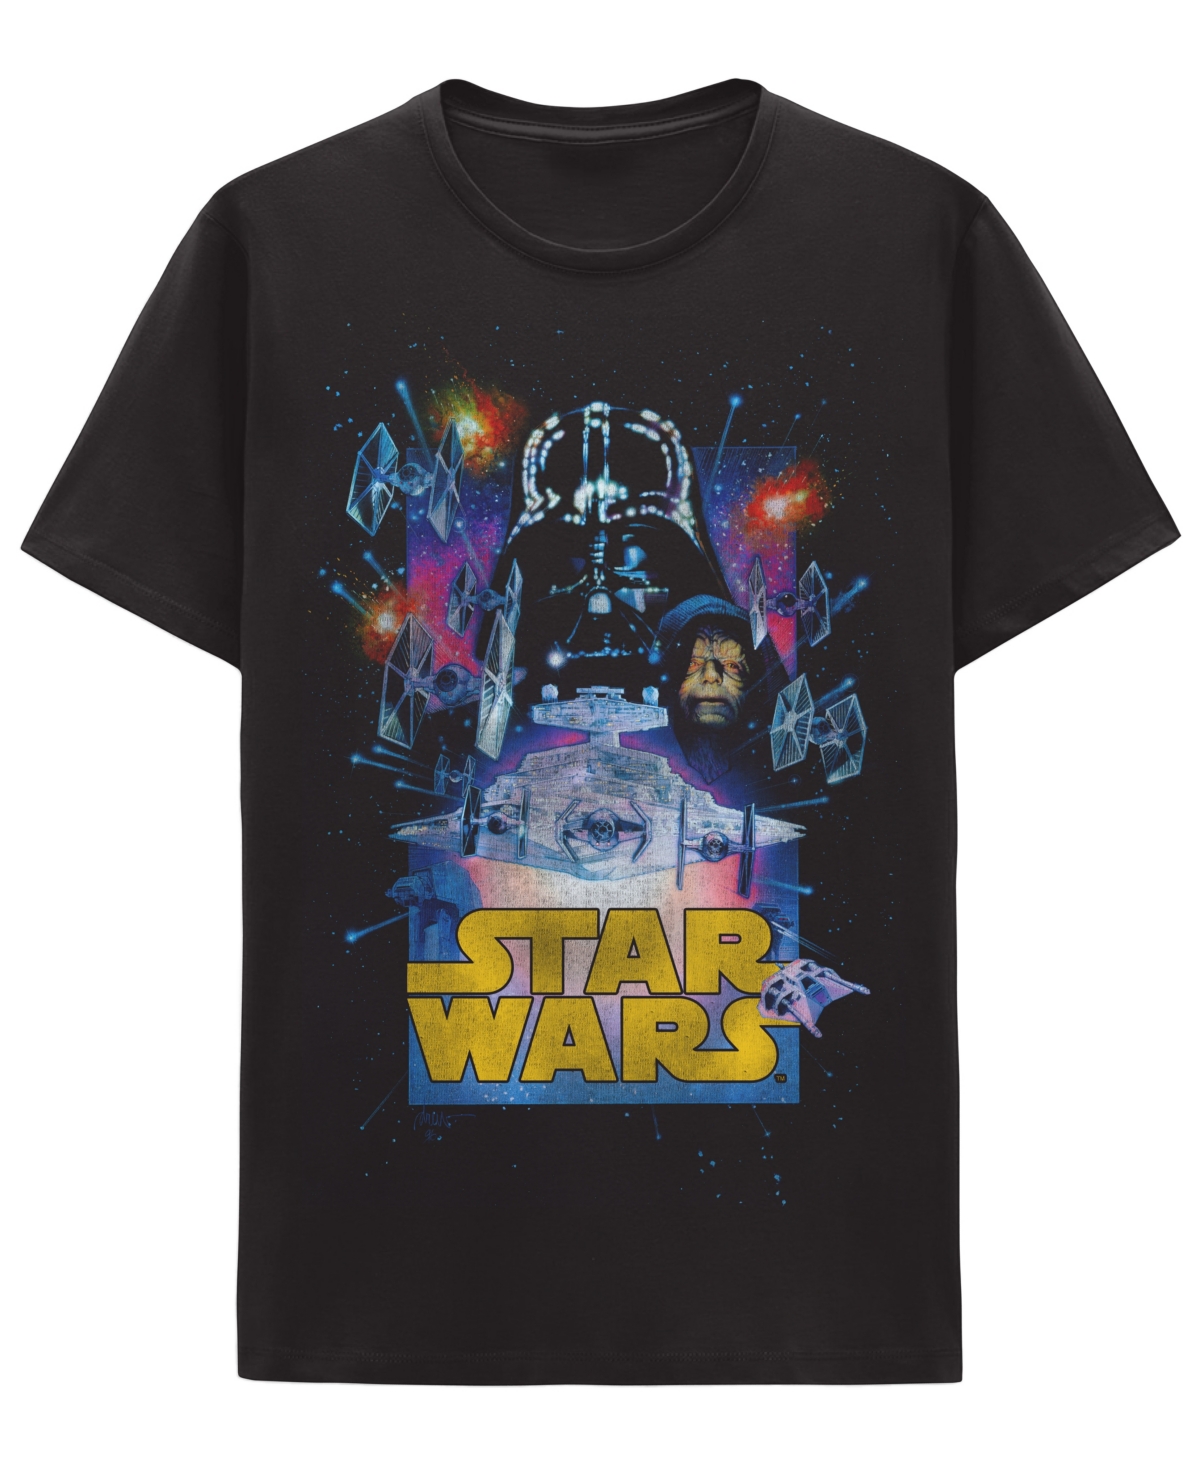 Men's Star Wars Short Sleeve T-shirt - Black